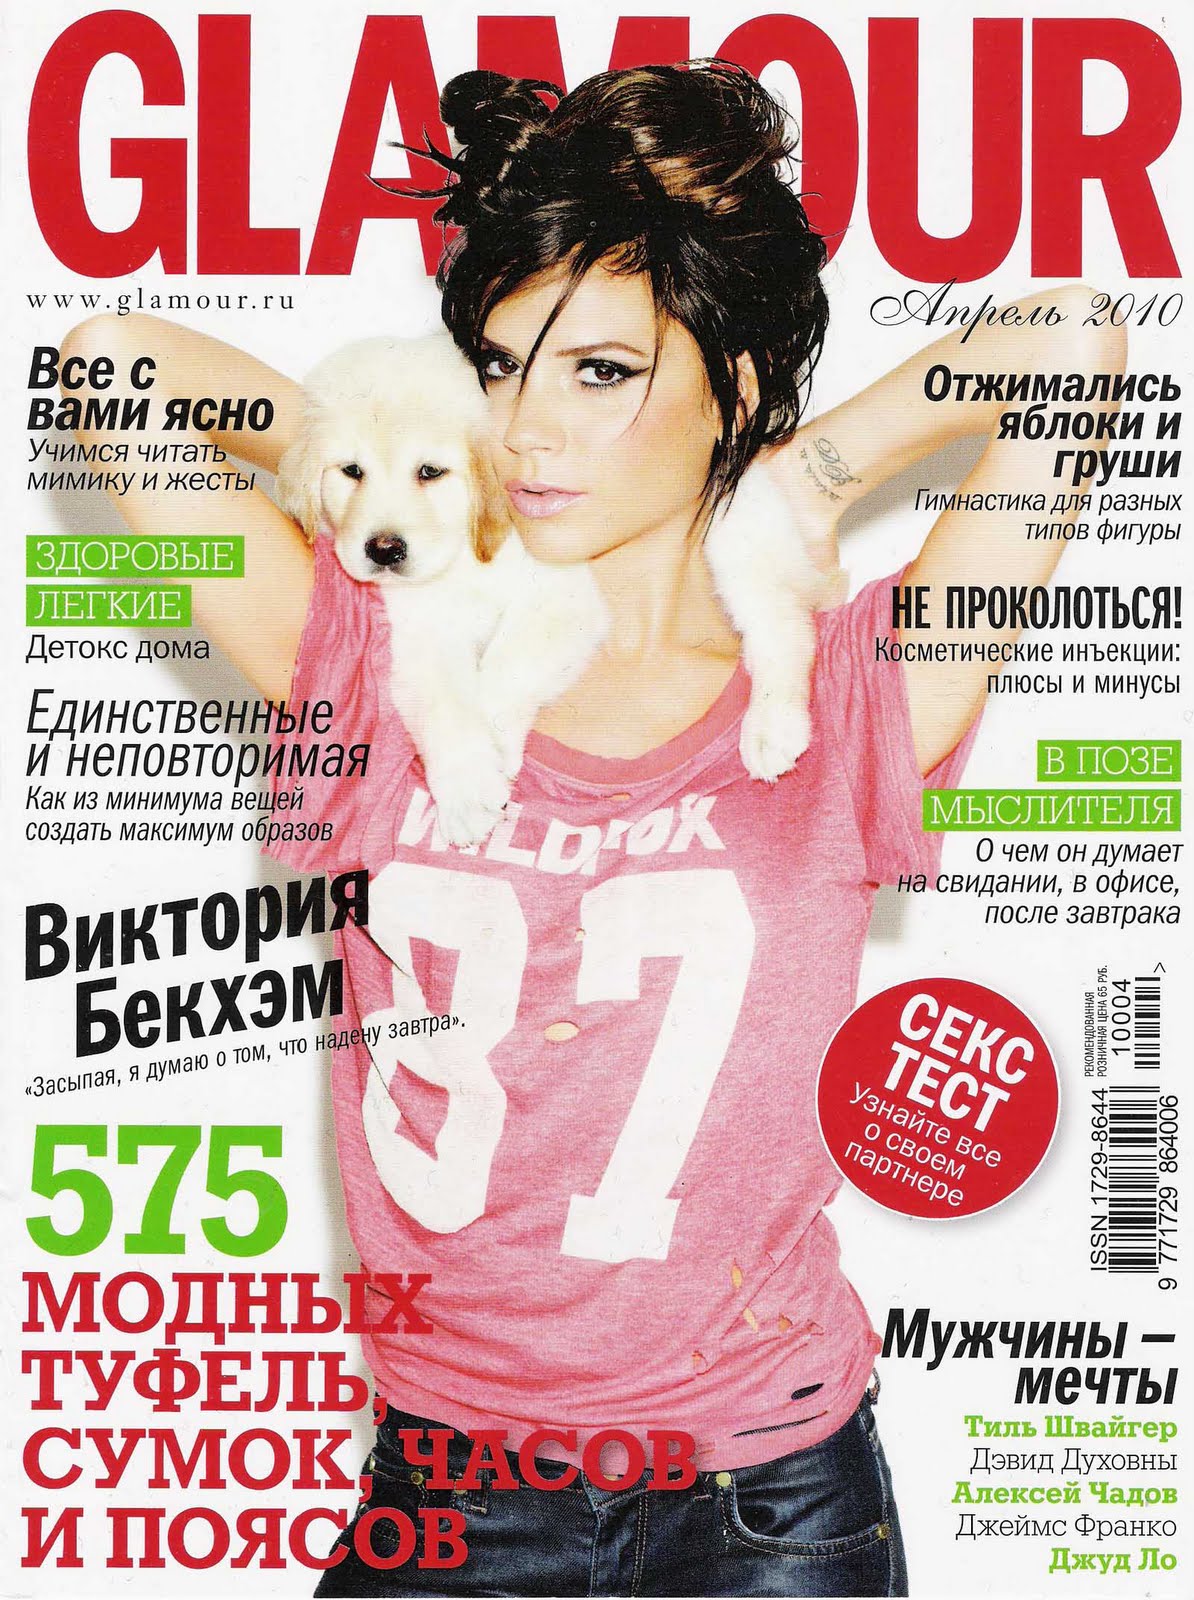 http://3.bp.blogspot.com/_RYrGUa3Ovr8/S7VOvOvzrdI/AAAAAAAADuw/3ke9JZqzhZo/s1600/GlamourRussia-1.bmp